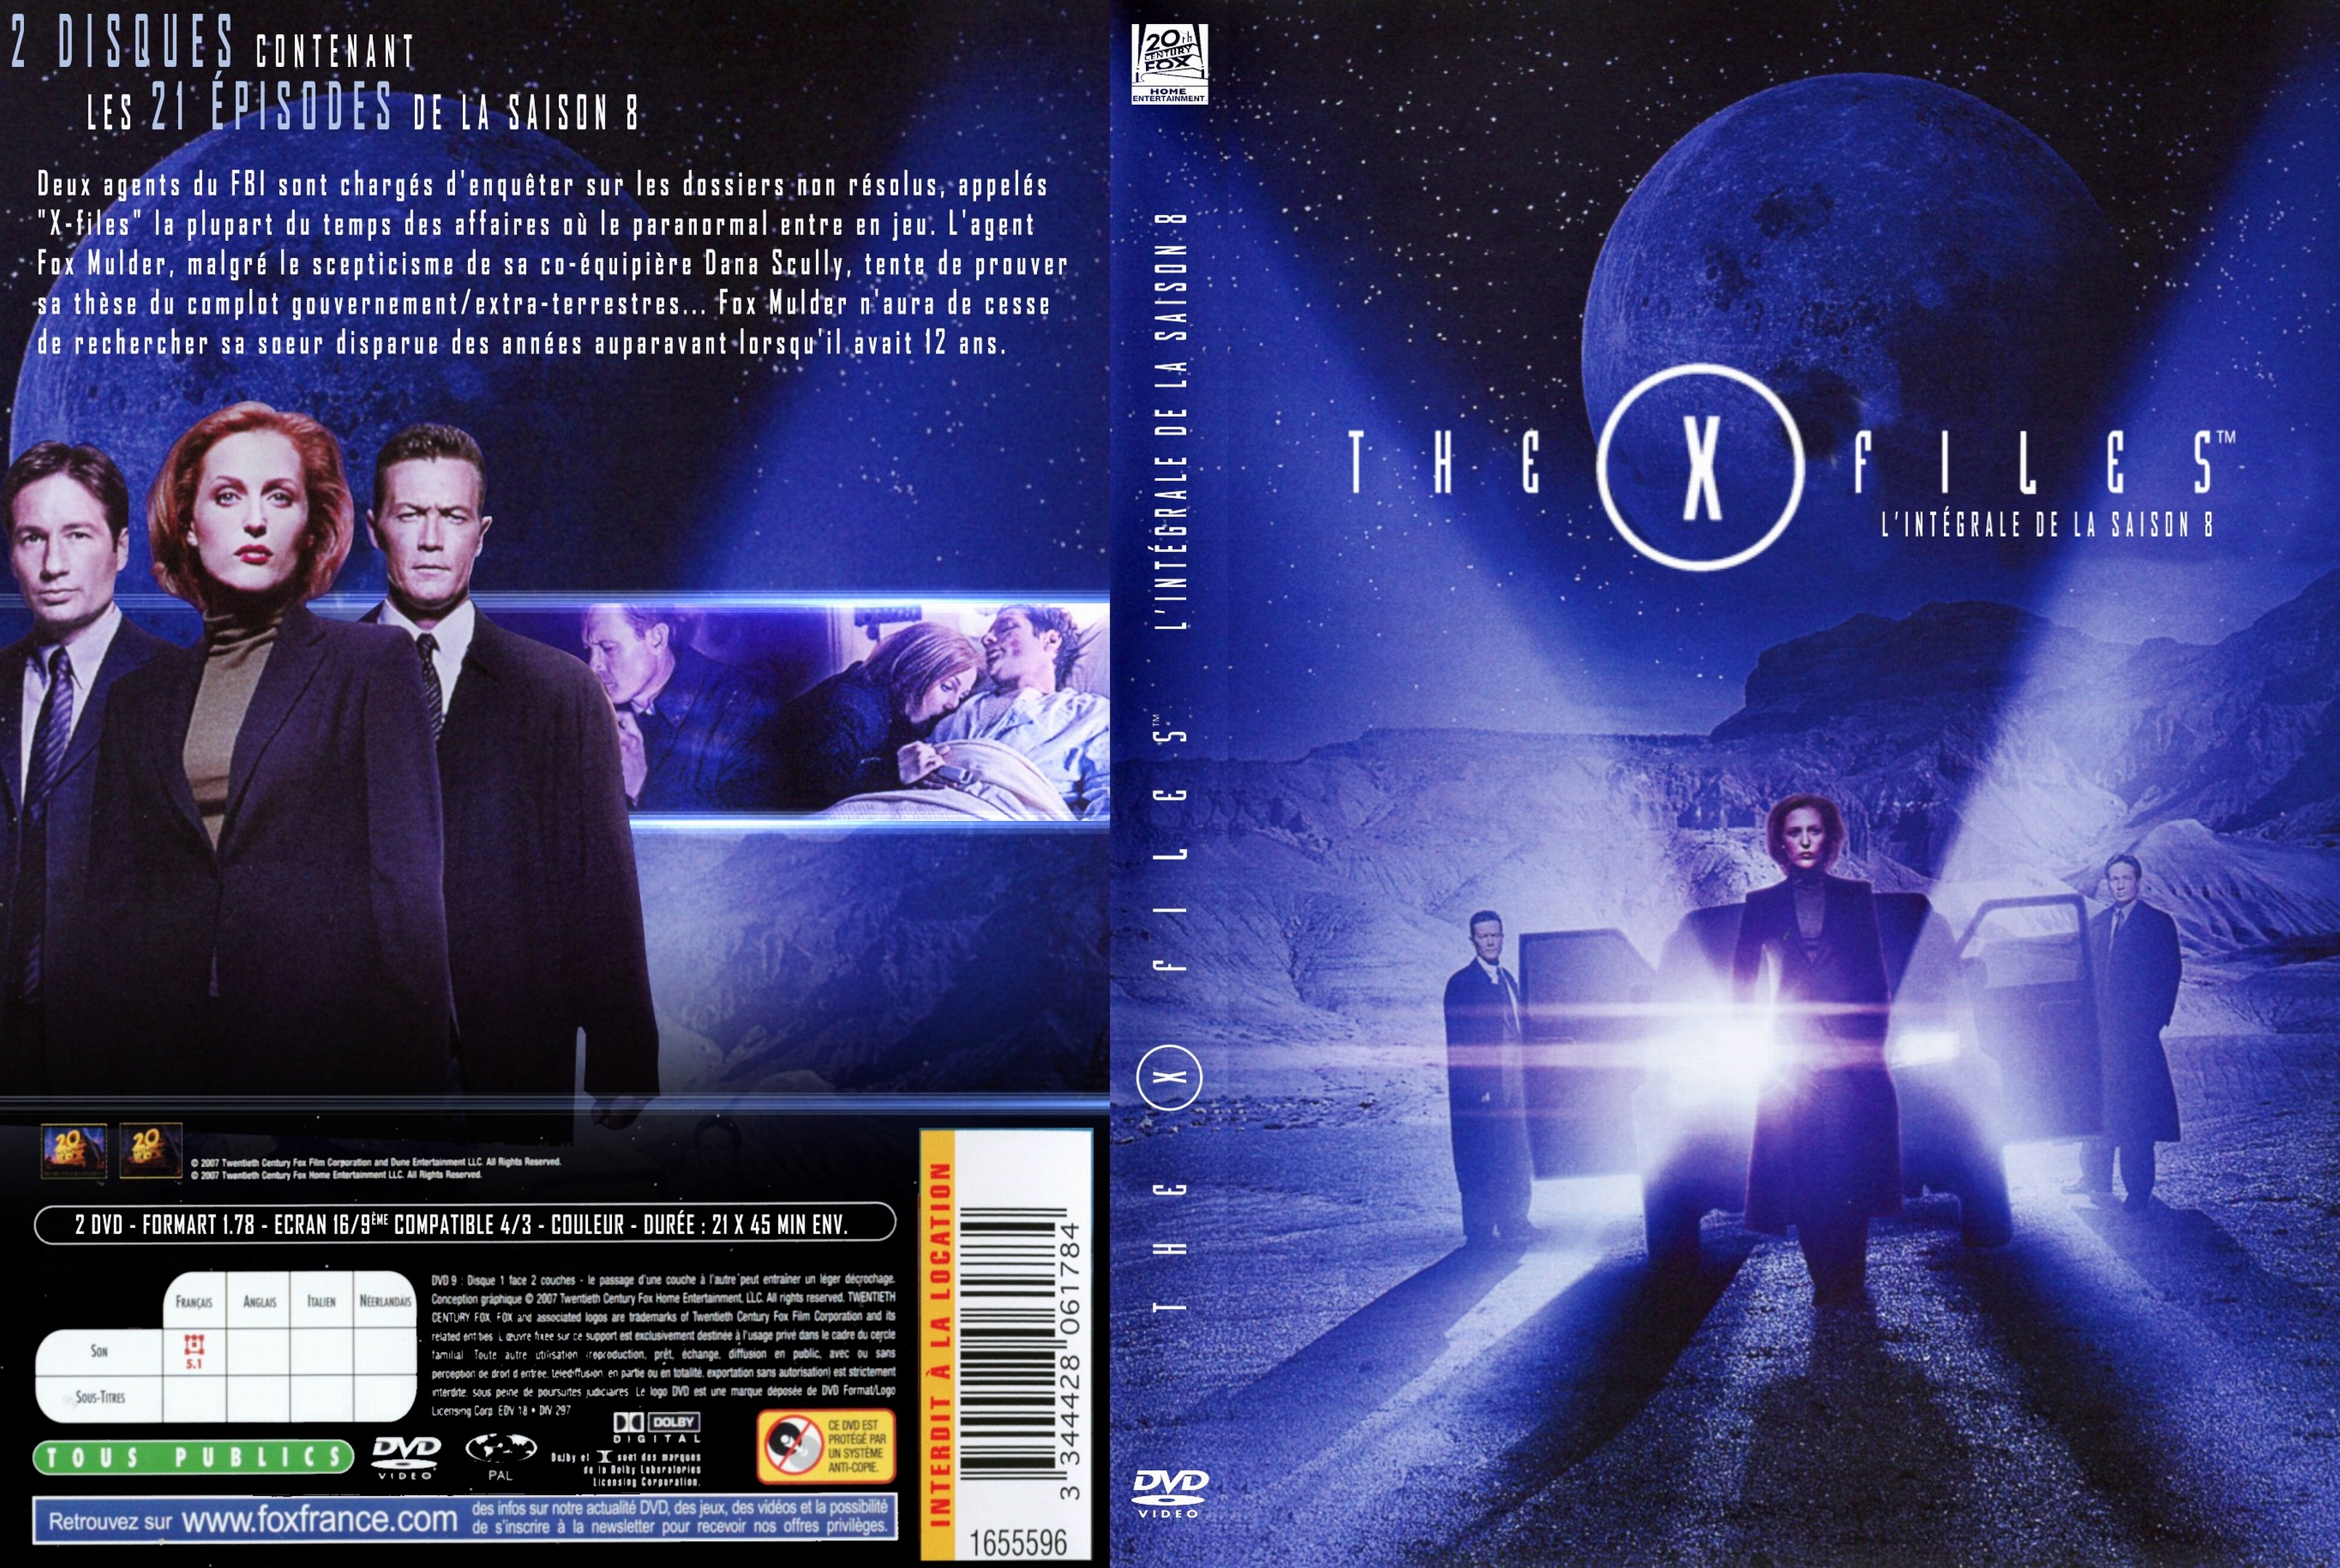 Jaquette DVD The X Files saison 8 custom